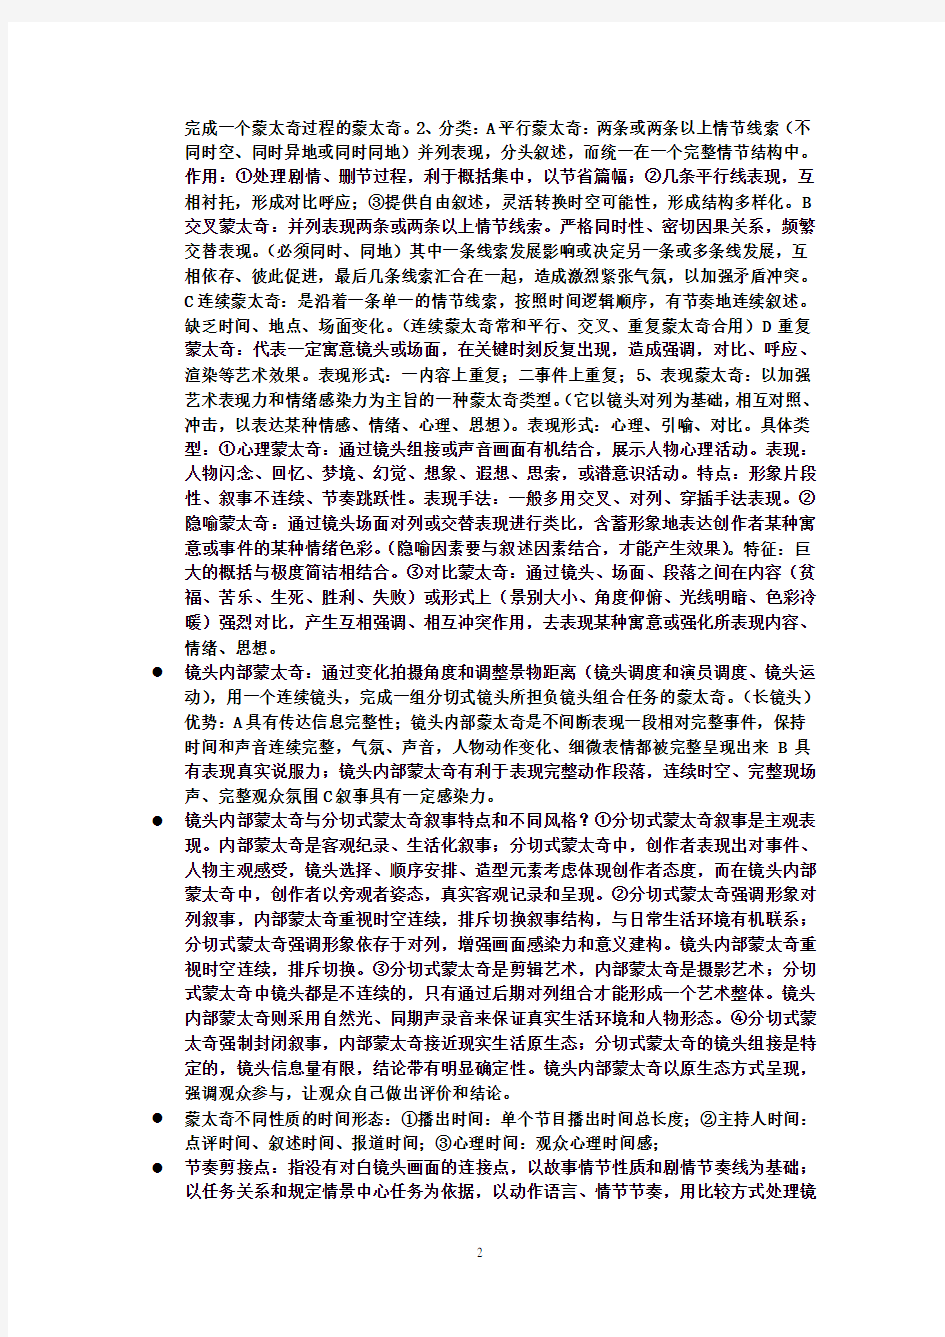 电视画面编辑复习资料(3).pdf